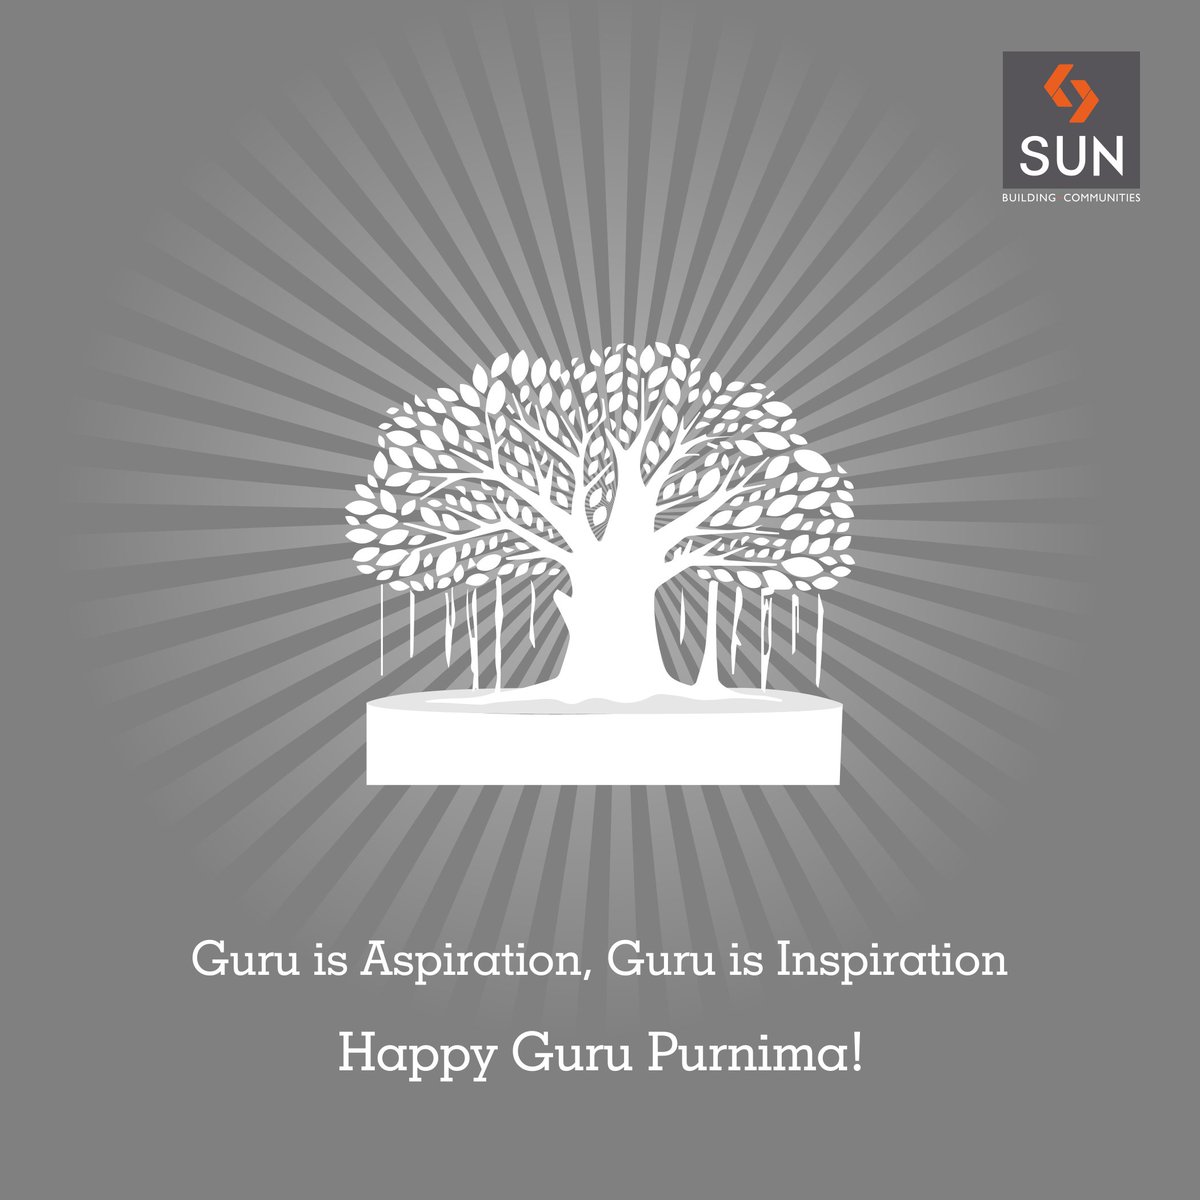 The time has come to honor the source of wisdom on this #GuruPurnima.
#HappyGuruPurnima #Guru #Wisdom https://t.co/O0yPEVmTlO